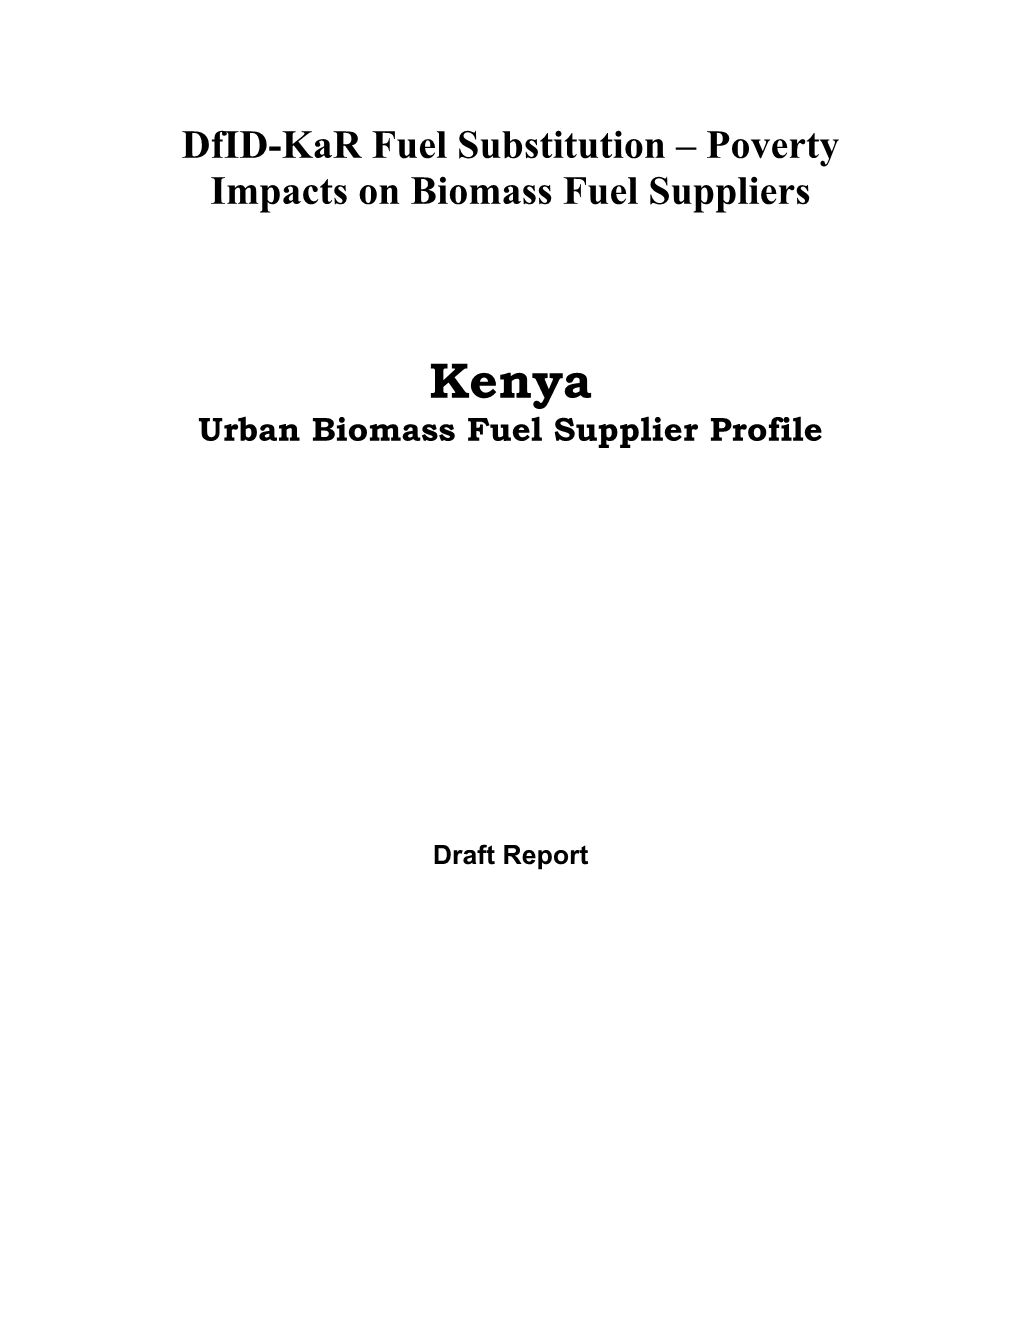 Kenya Urban Biomass Fuel Supplier Profile